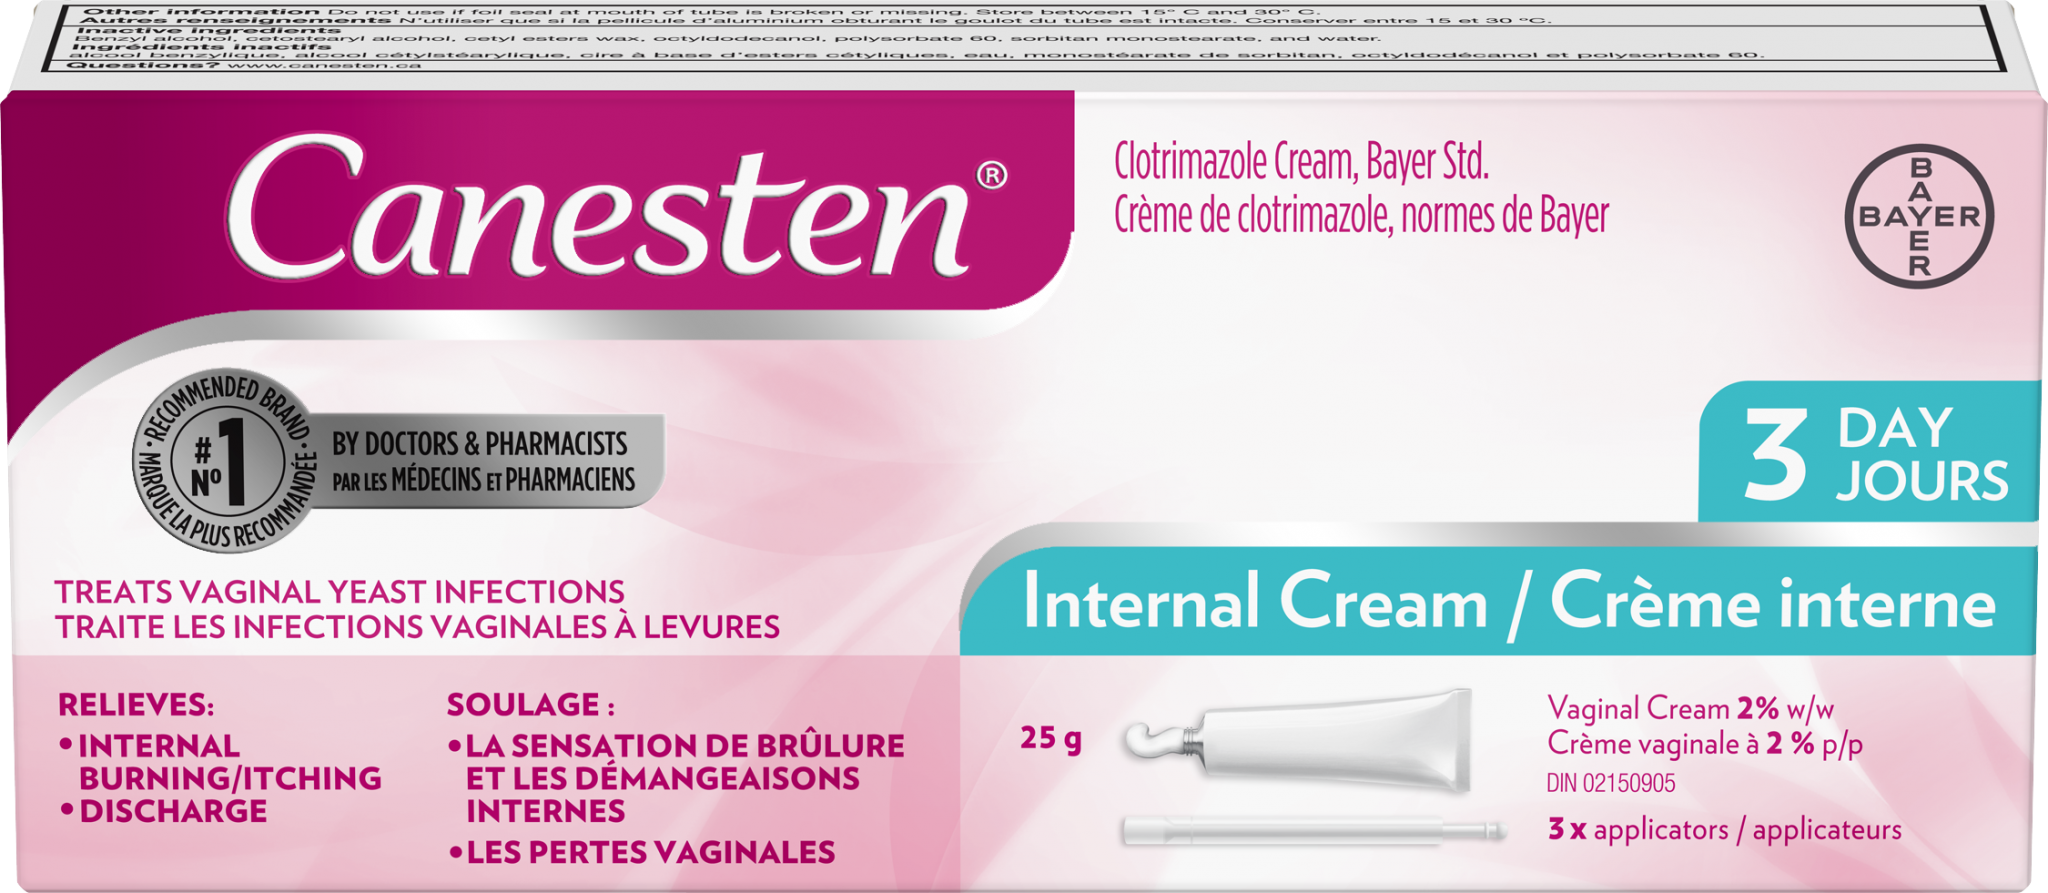 Canesten 3 Day Cream Treatment Front Eng 2048x893 